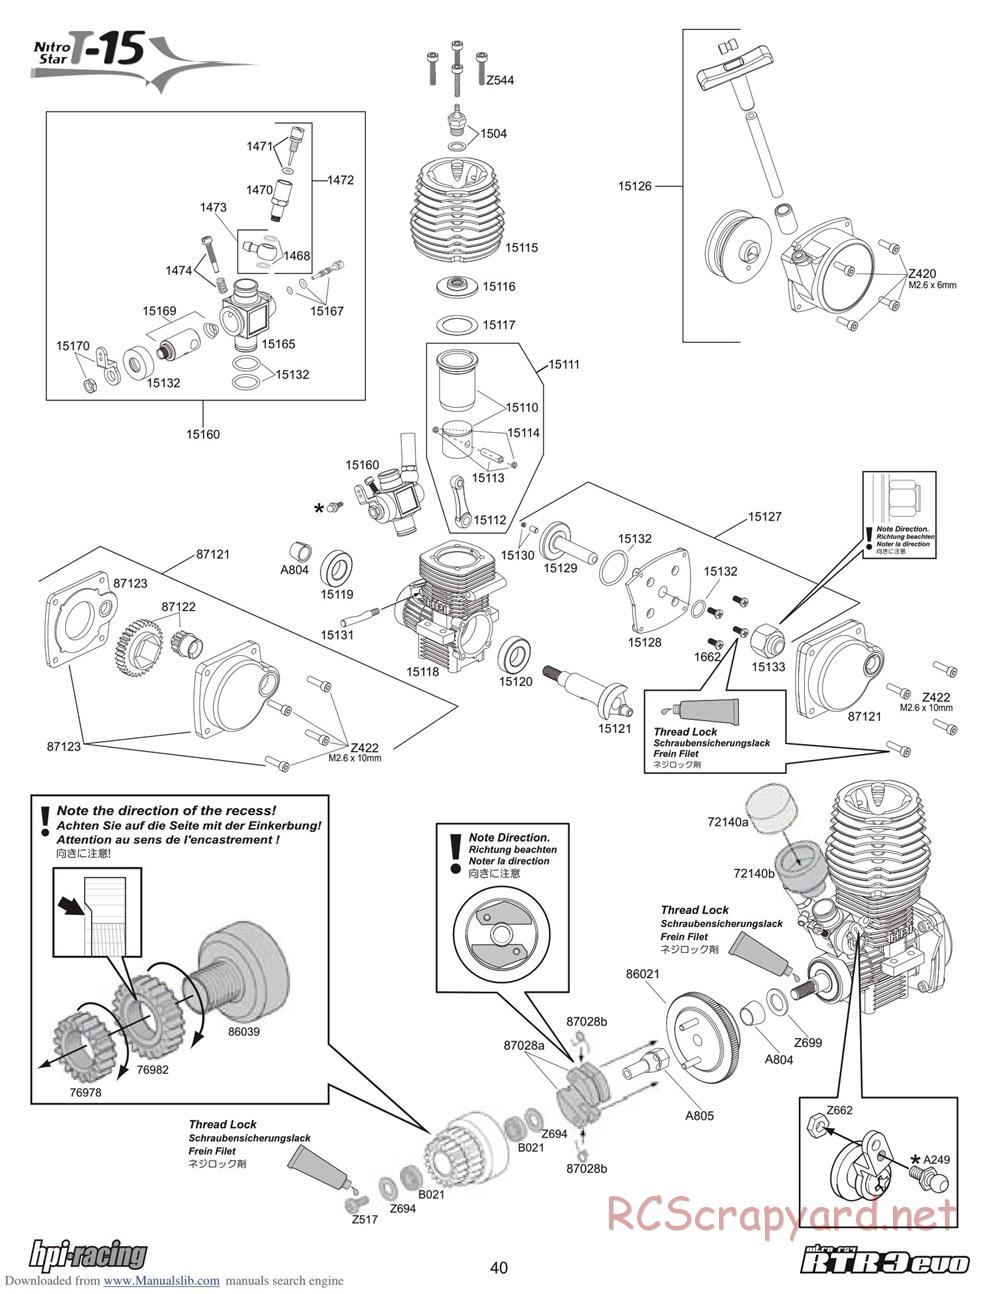 HPI - Nitro RS4 3 Evo - Manual - Page 40